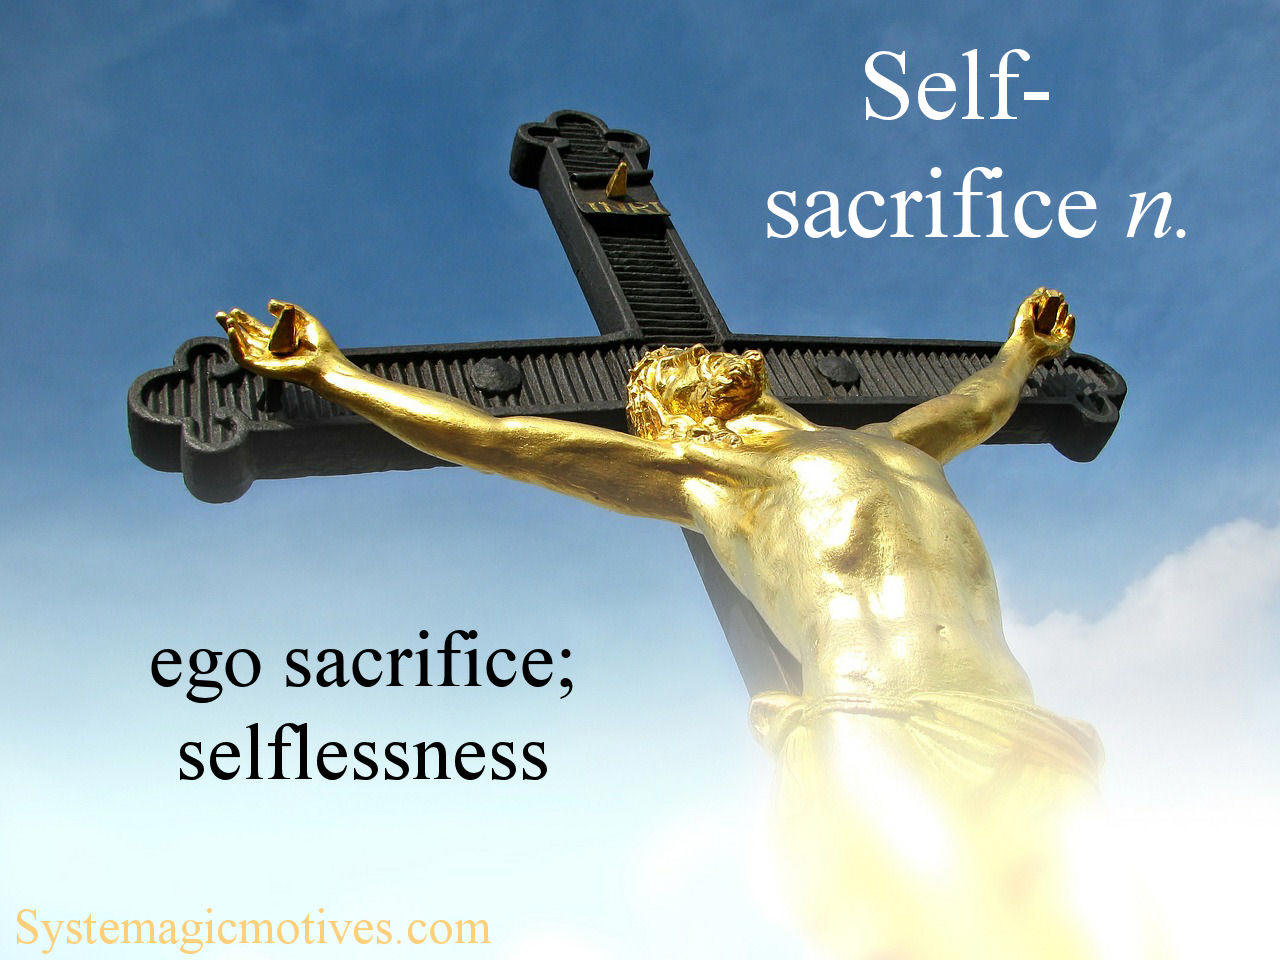 Graphic Definition of Self-sacrifice